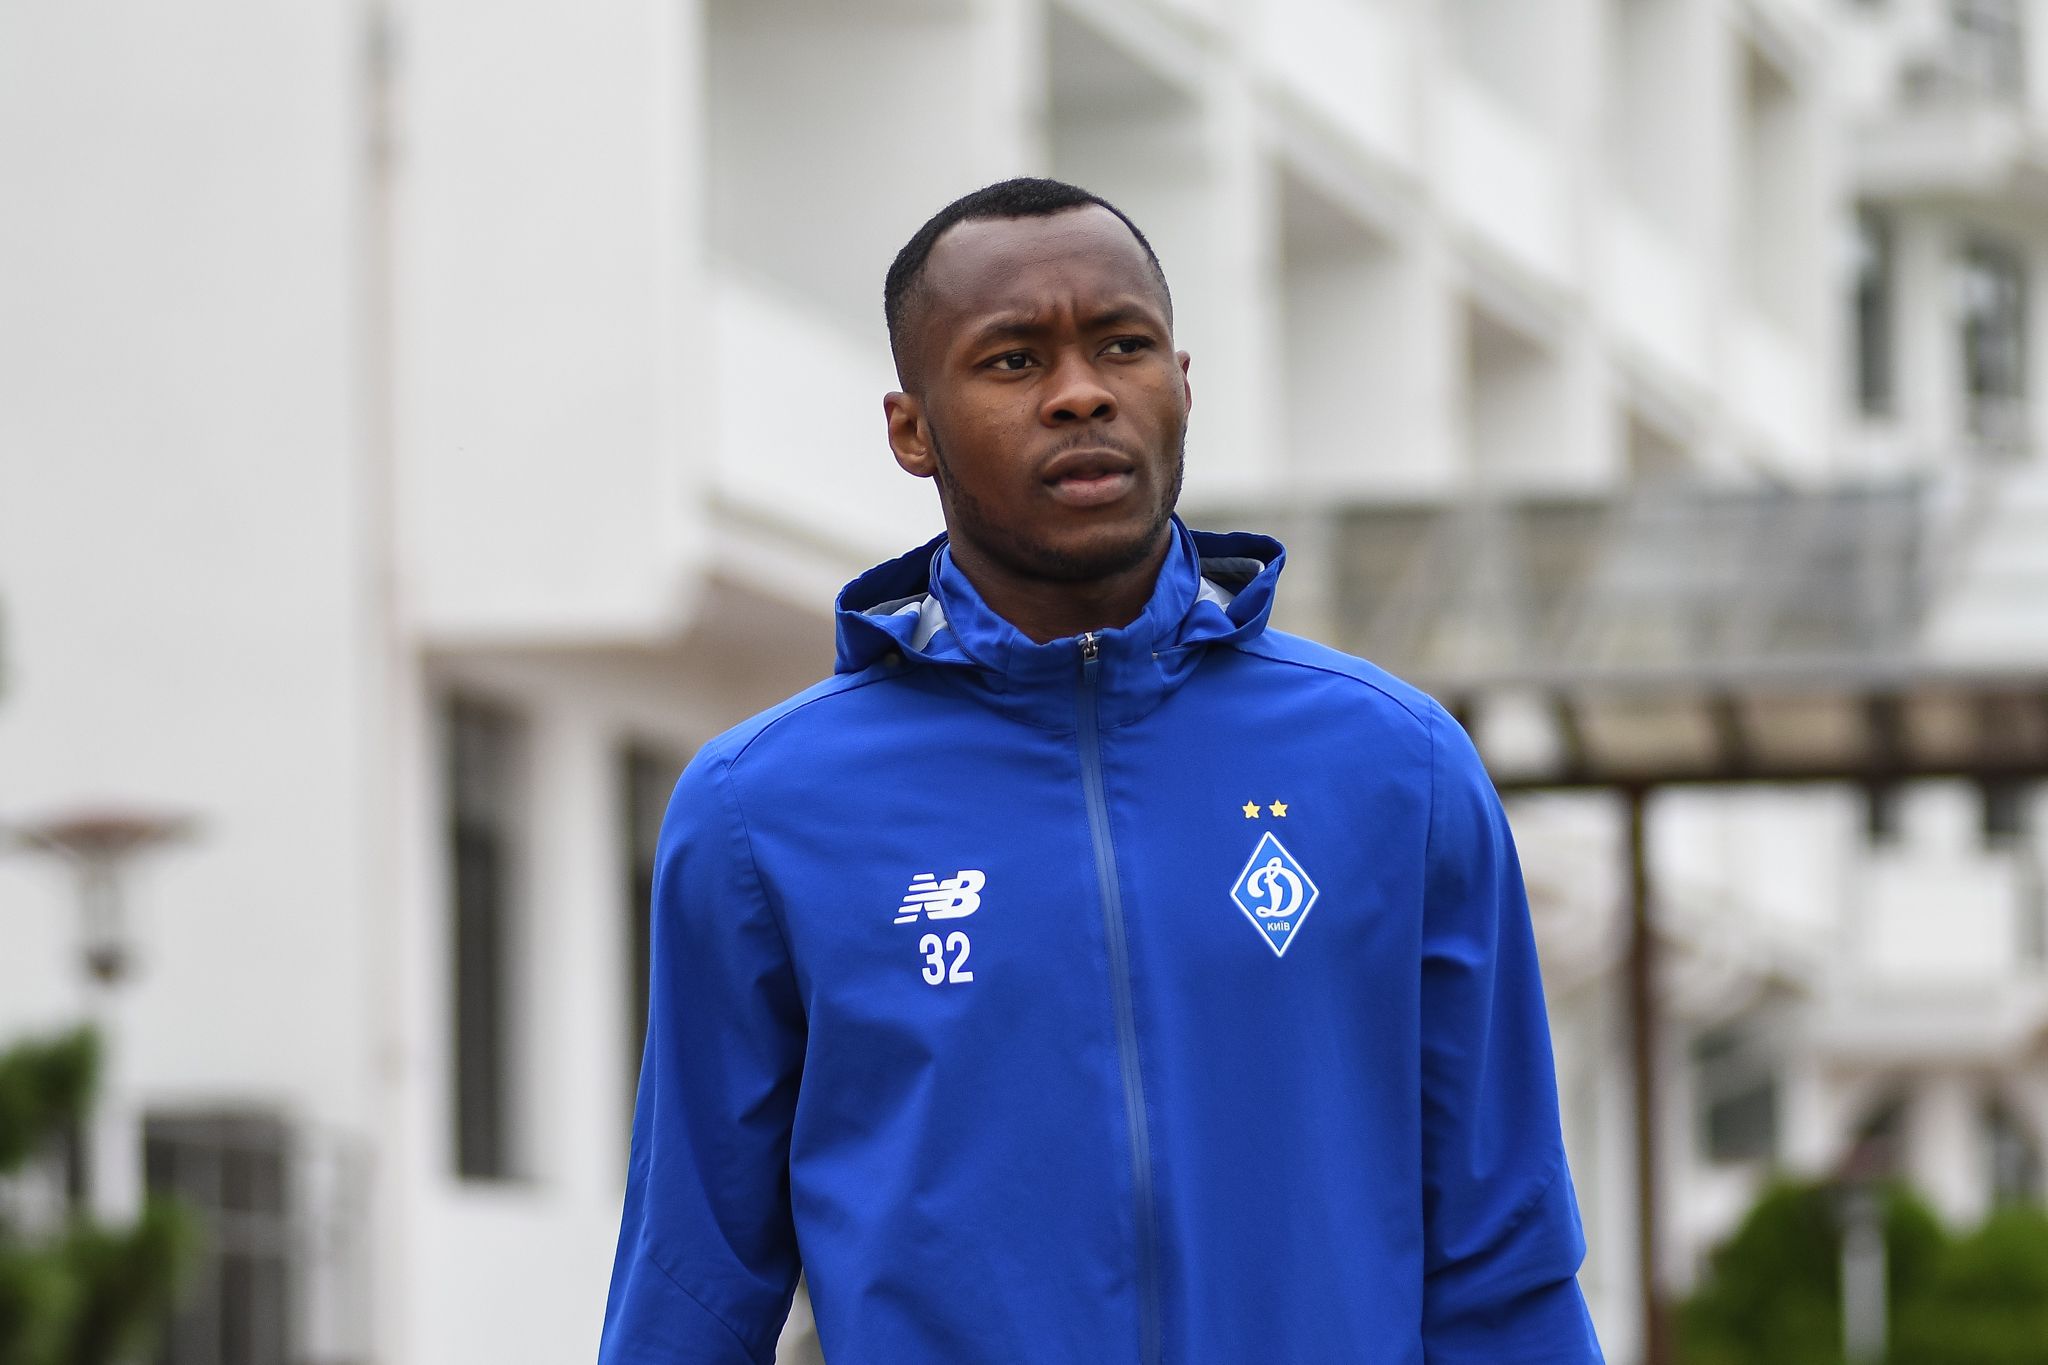 Ibrahim Kargbo to feature for Celje on loan